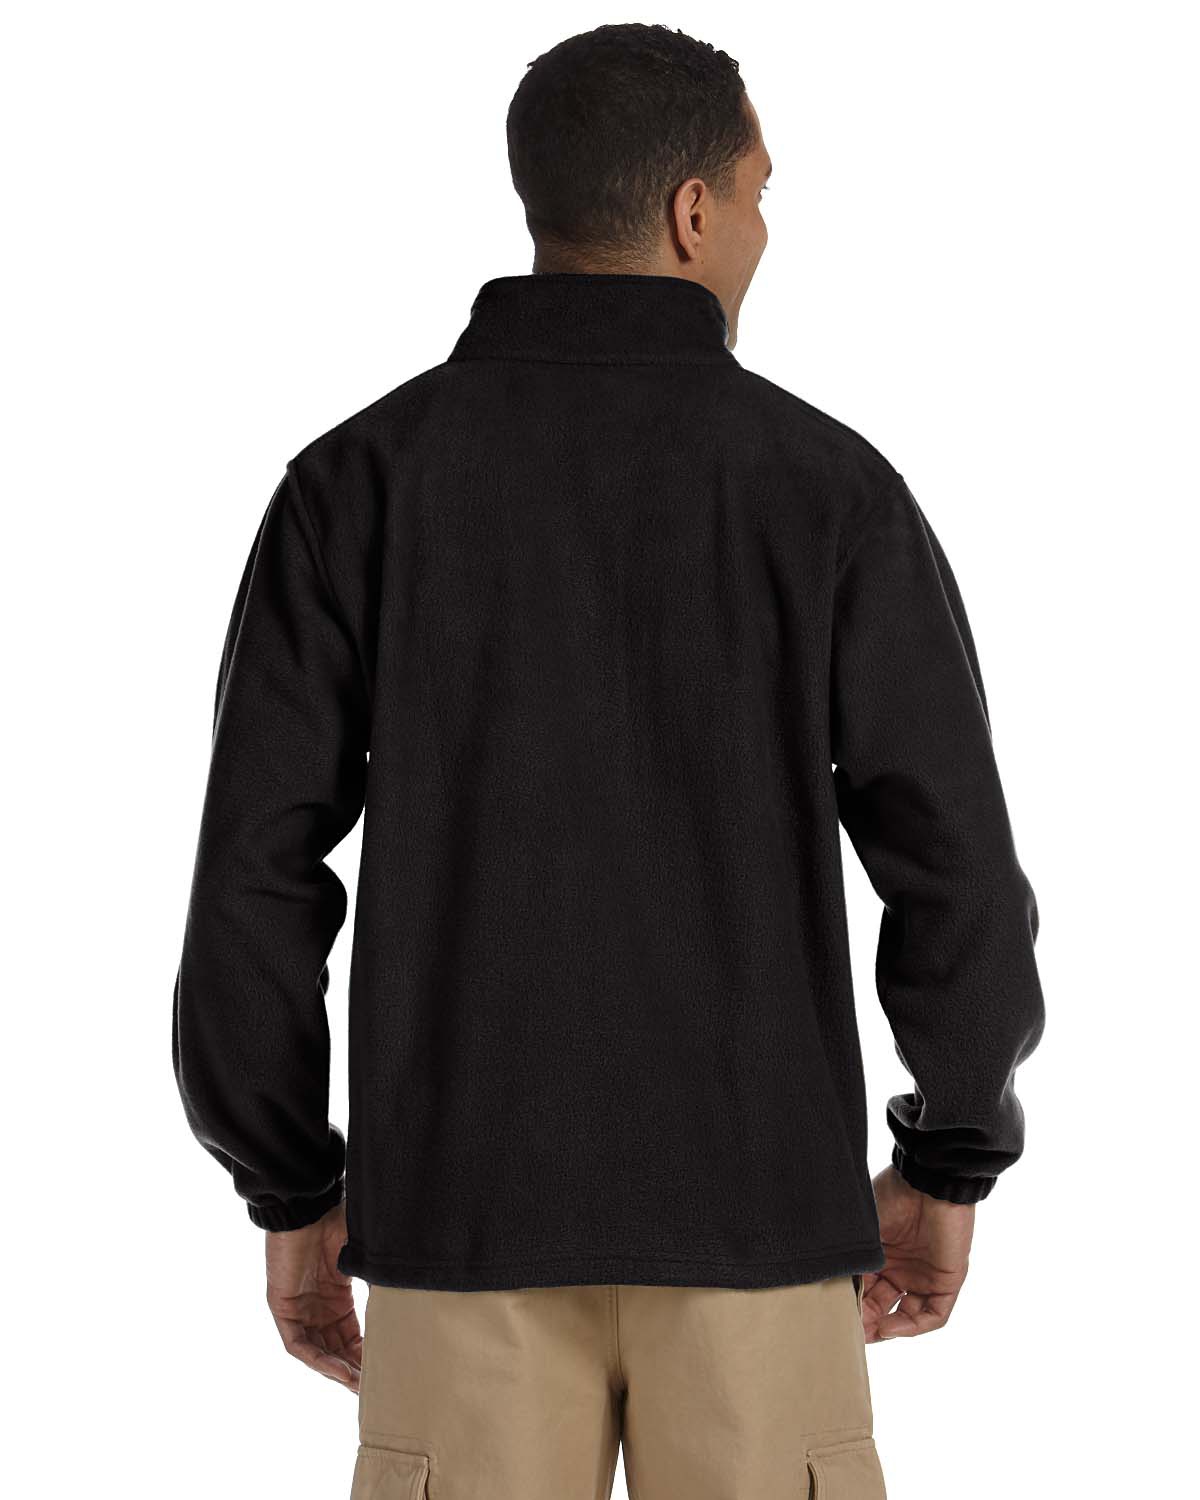 'Harriton M990 Men's Full Zip Polyester Spun Soft Fleece Jacket'